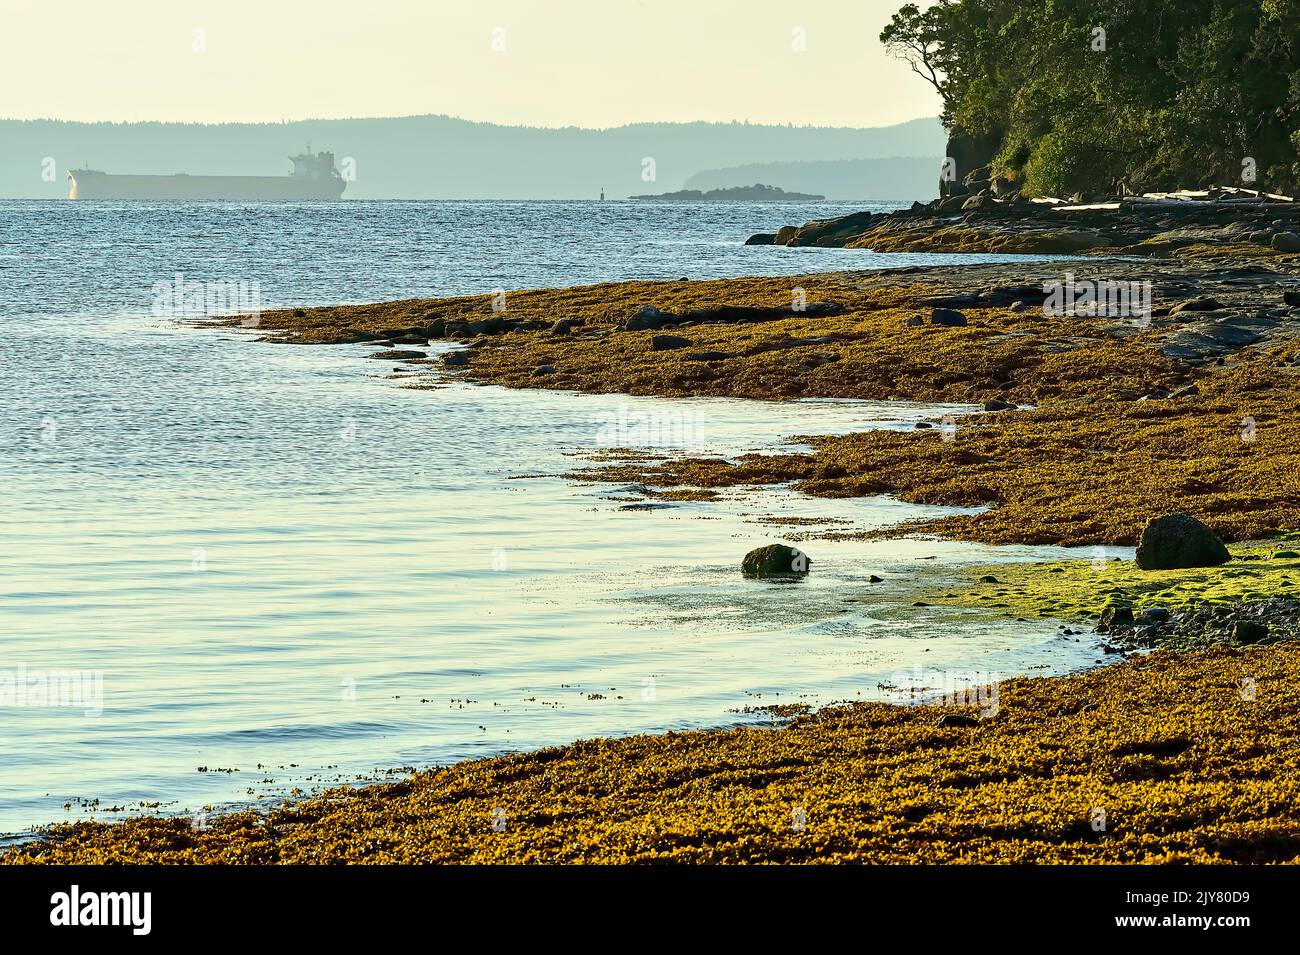 A landscape image of the seashore on Vancouver Island Stock Photo